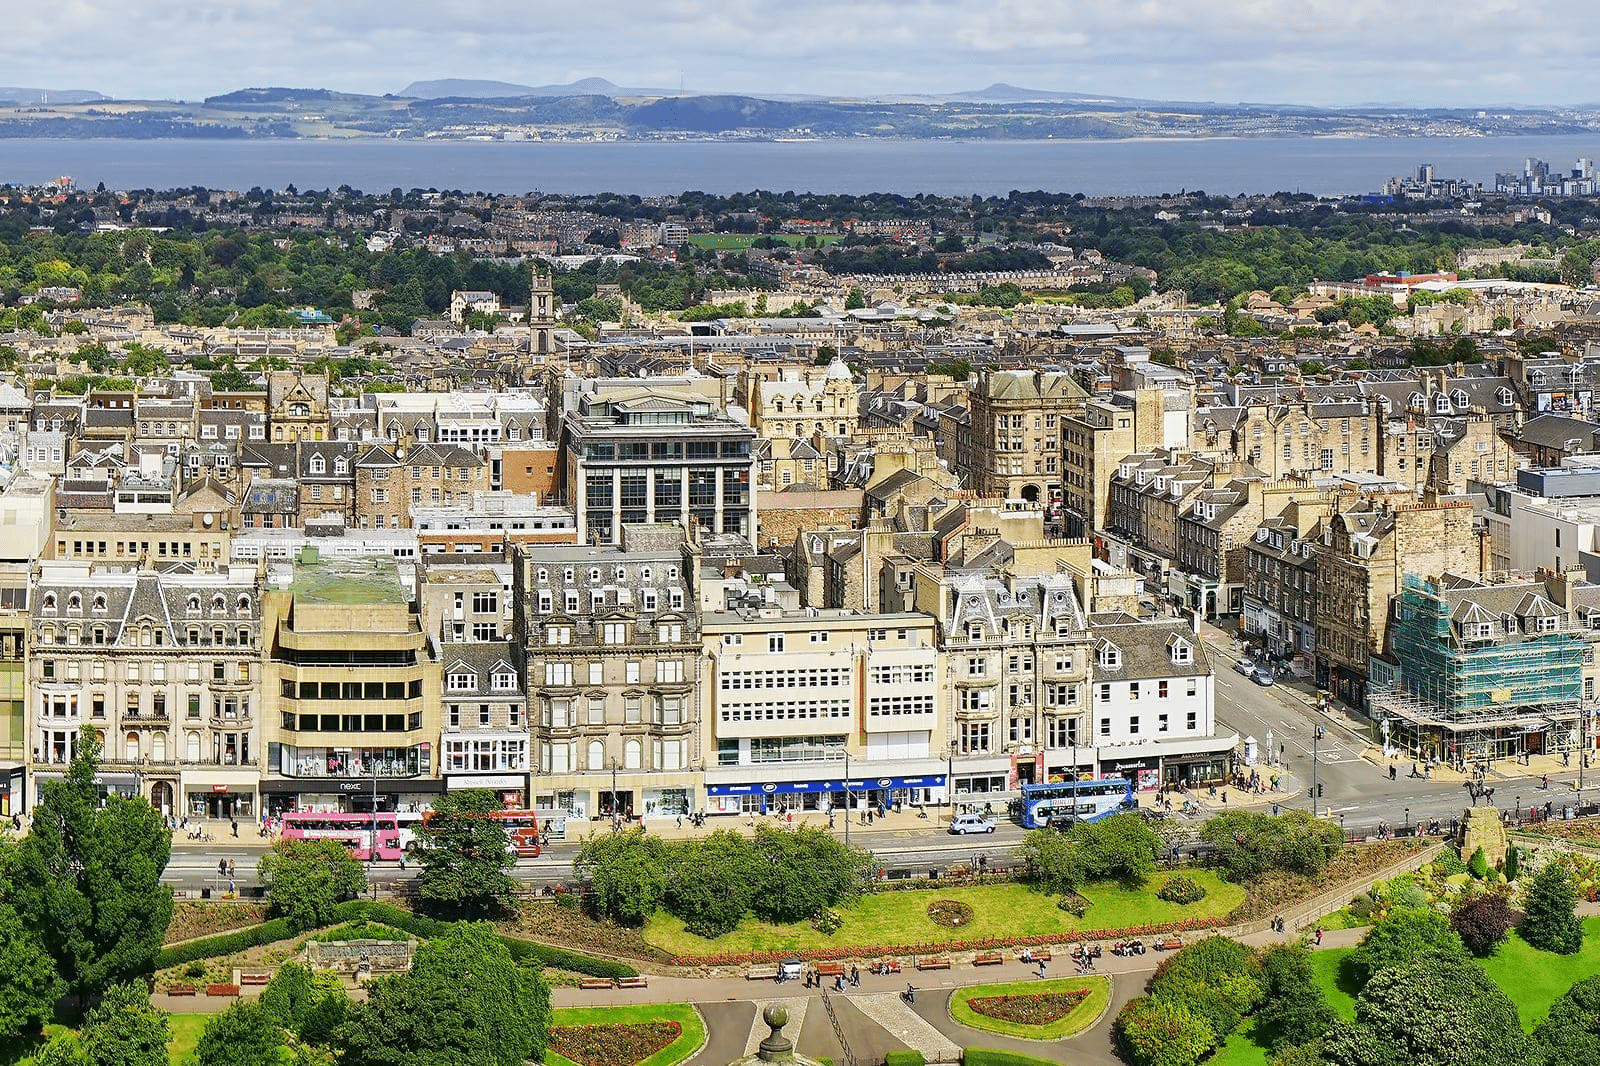 Edinburgh New Town Overview